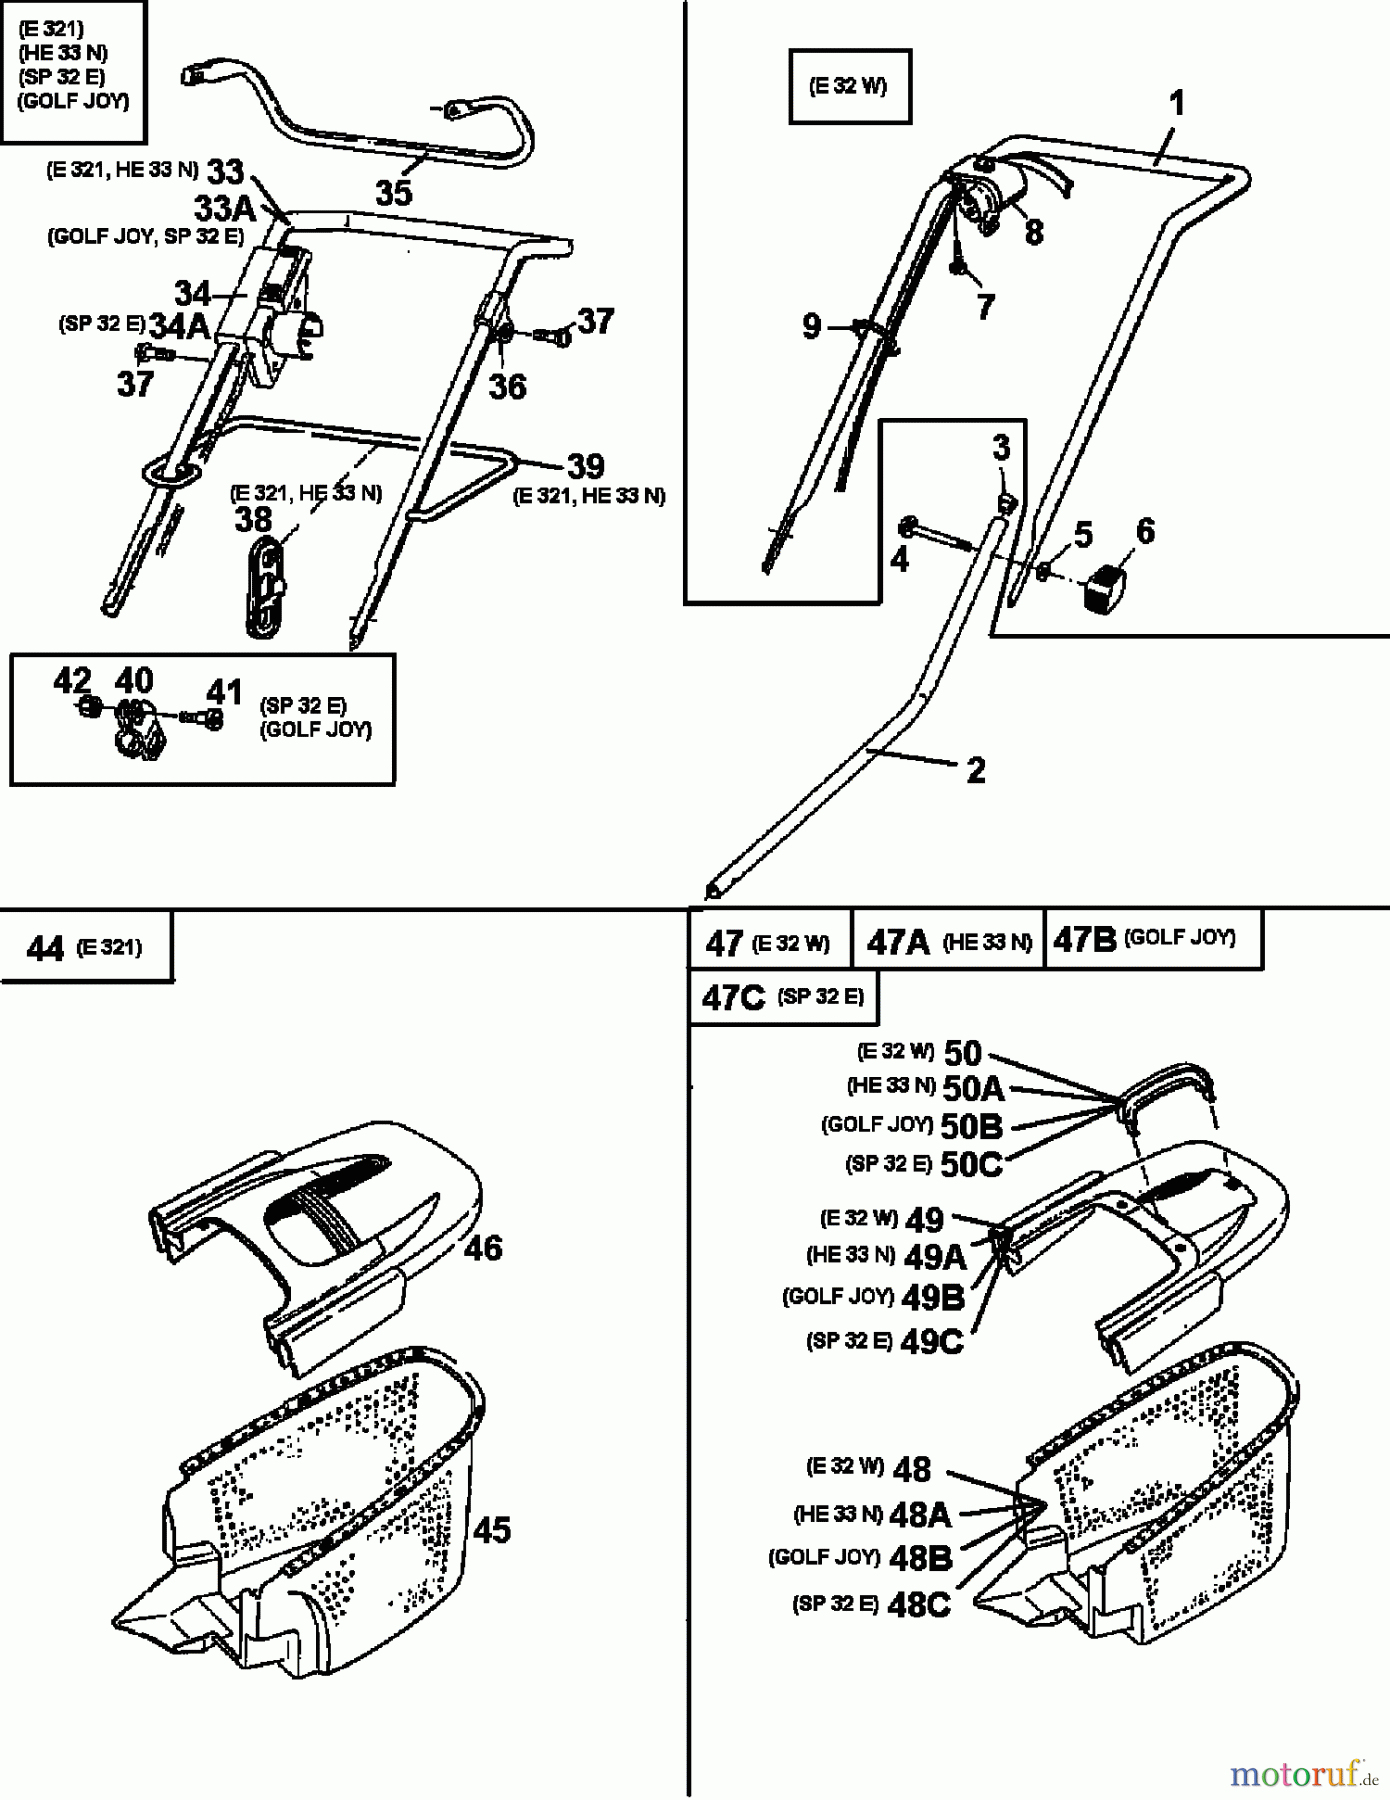  Gutbrod Electric mower HE 33 N 18A-C5C-604  (1998) Grass box, Handle